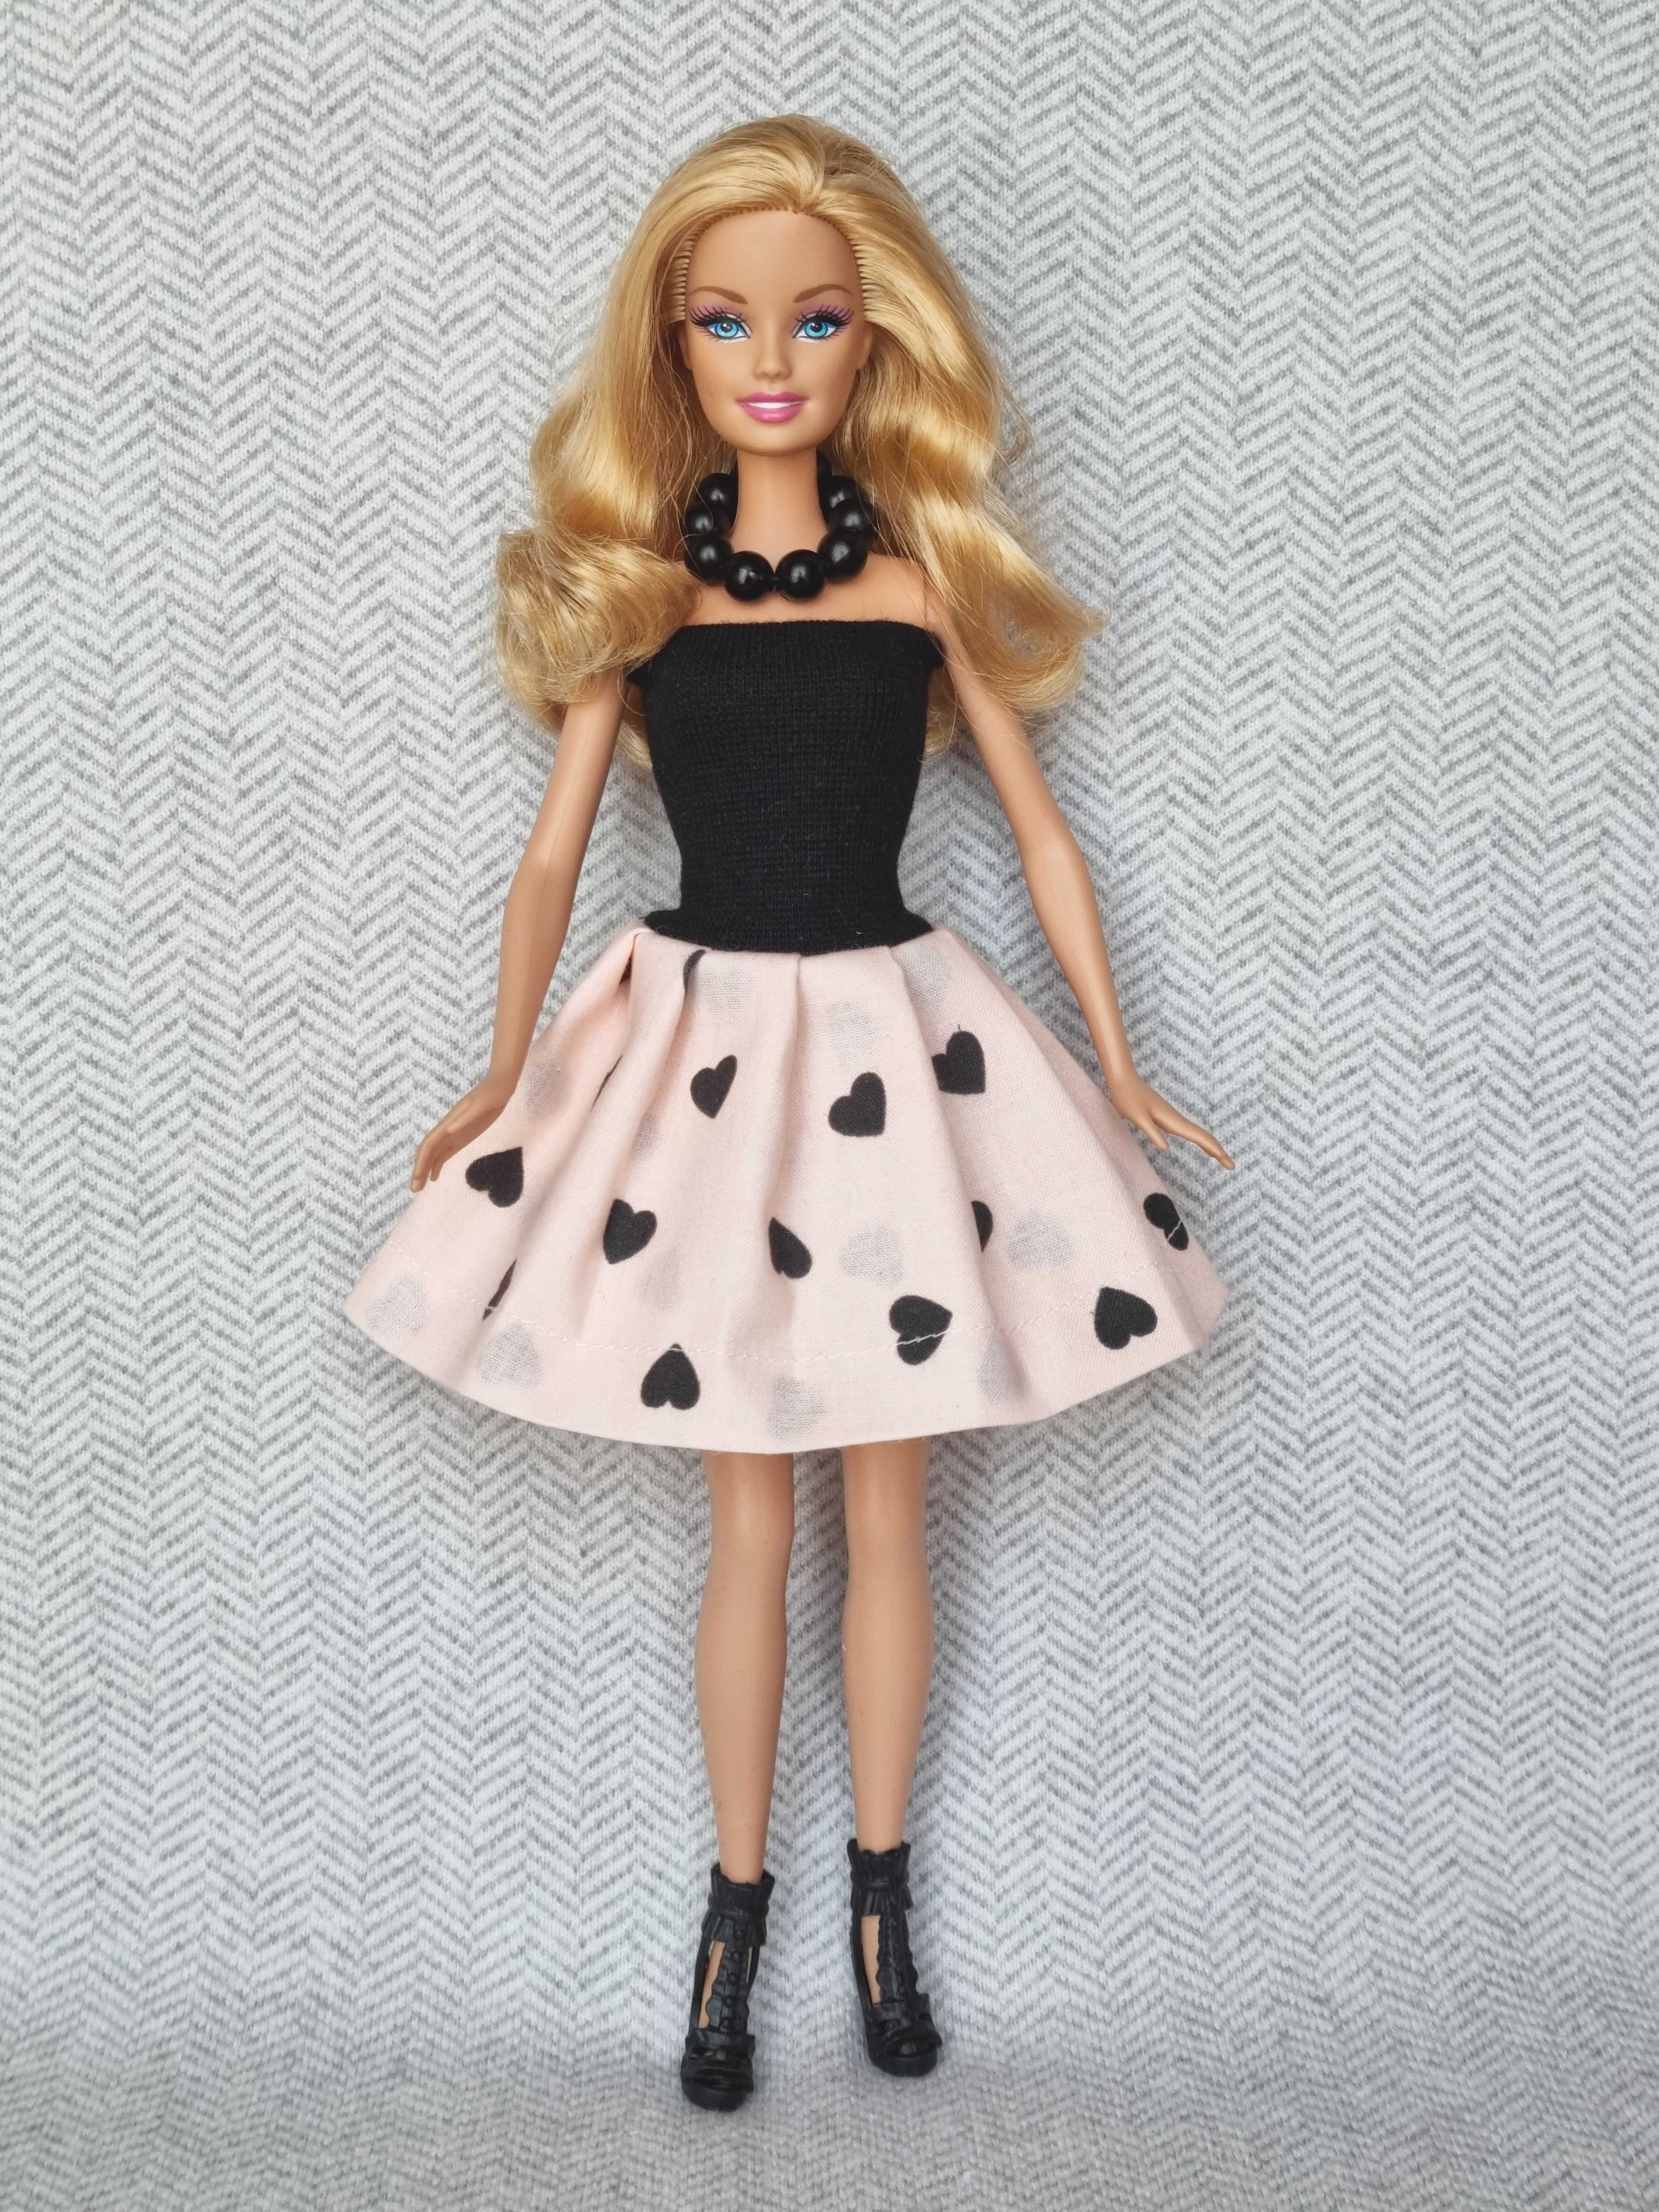 Kombinezon i sukienki dla lalki Barbie! W kpl. buciki i korale